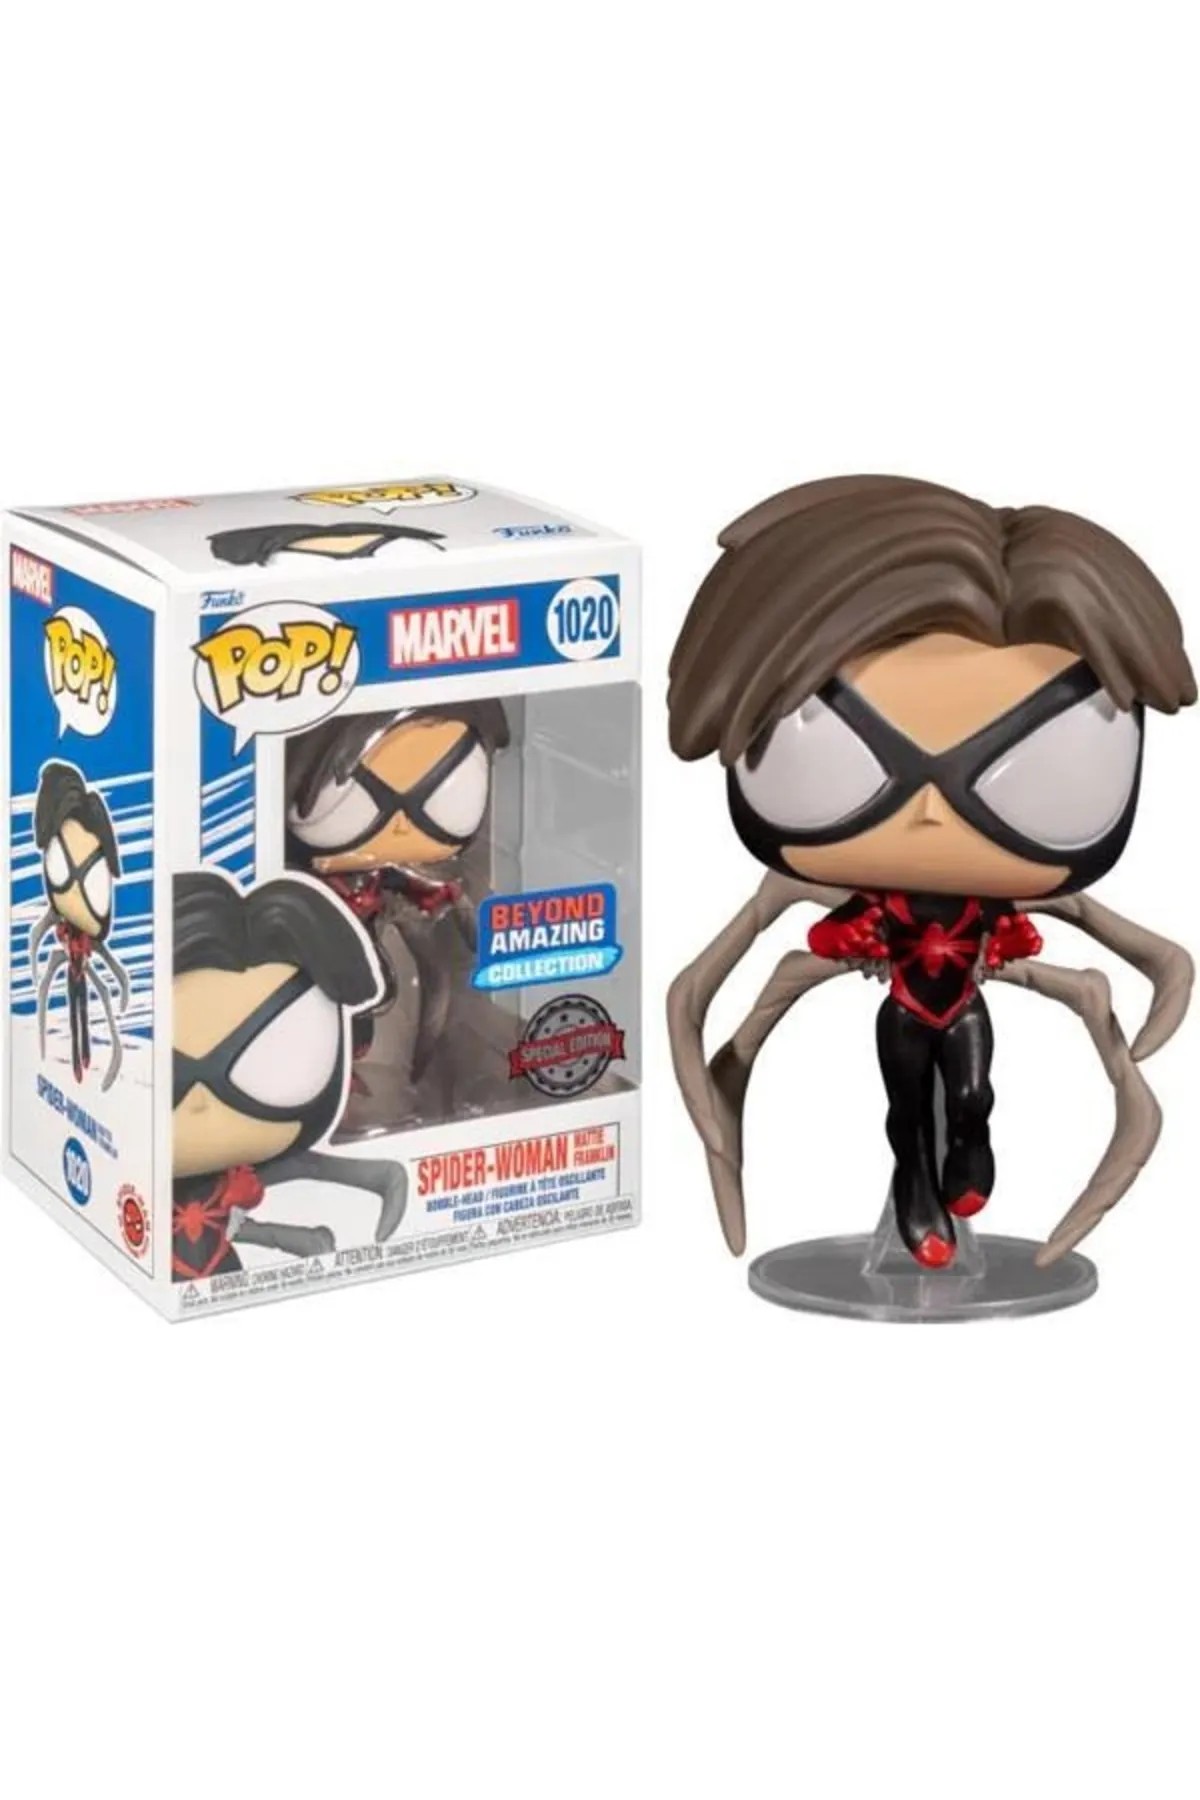 MARVEL FUNKO POP! Spider-Woman Mattie Franklin Special Edition No: 1020